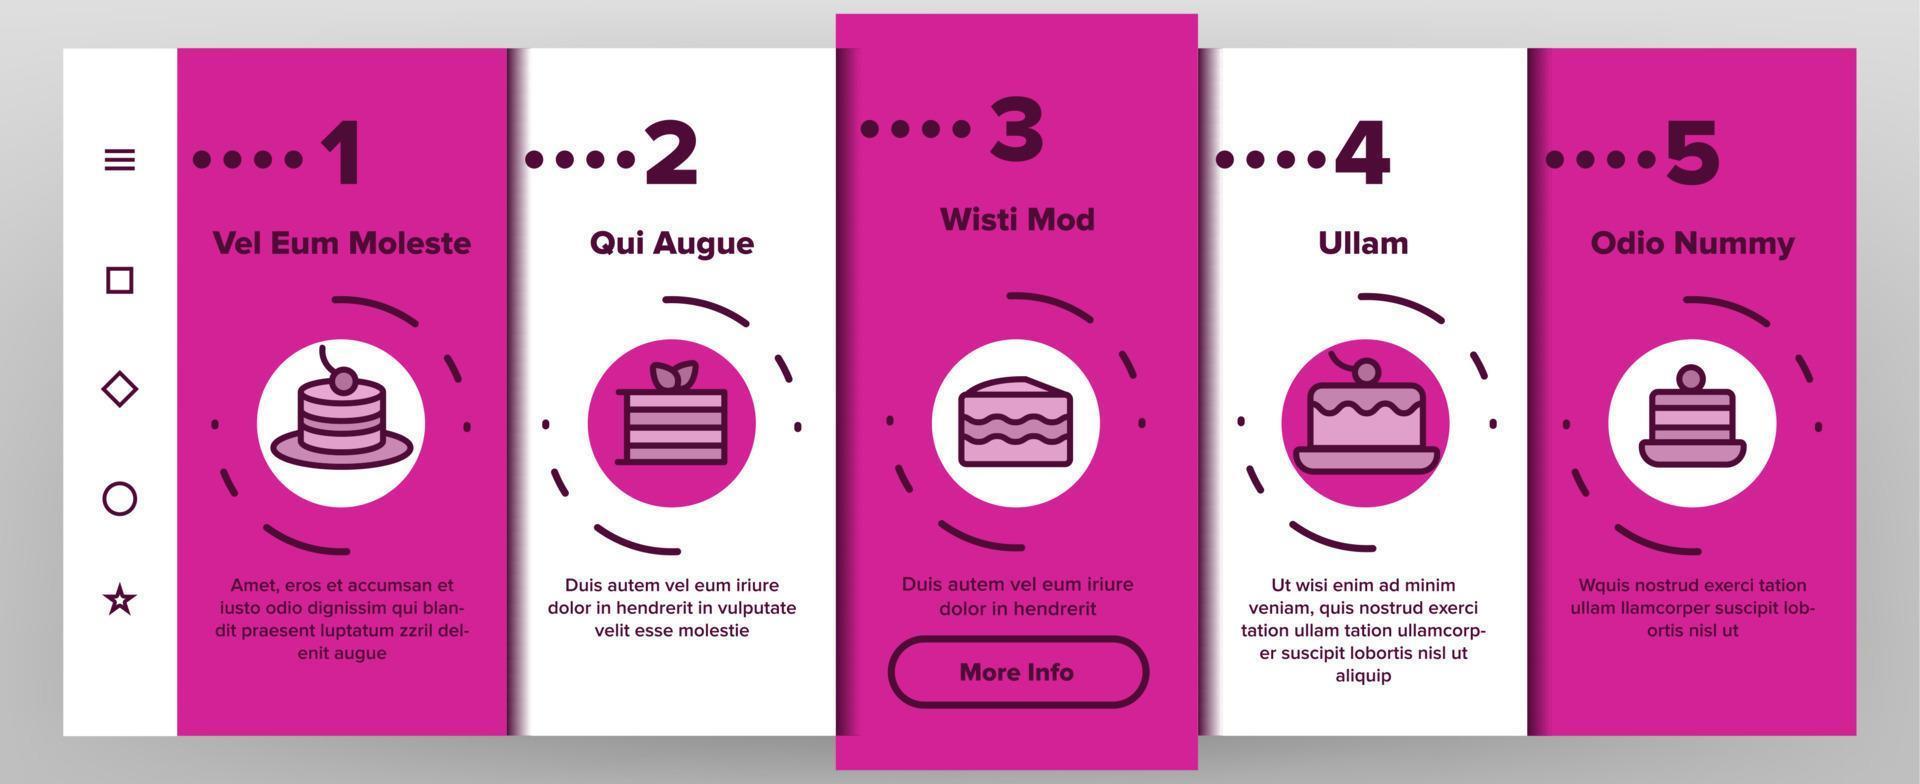 süße Käsekuchen, Bäckerei-Vektor-Onboarding-Bildschirm der mobilen App-Seite vektor